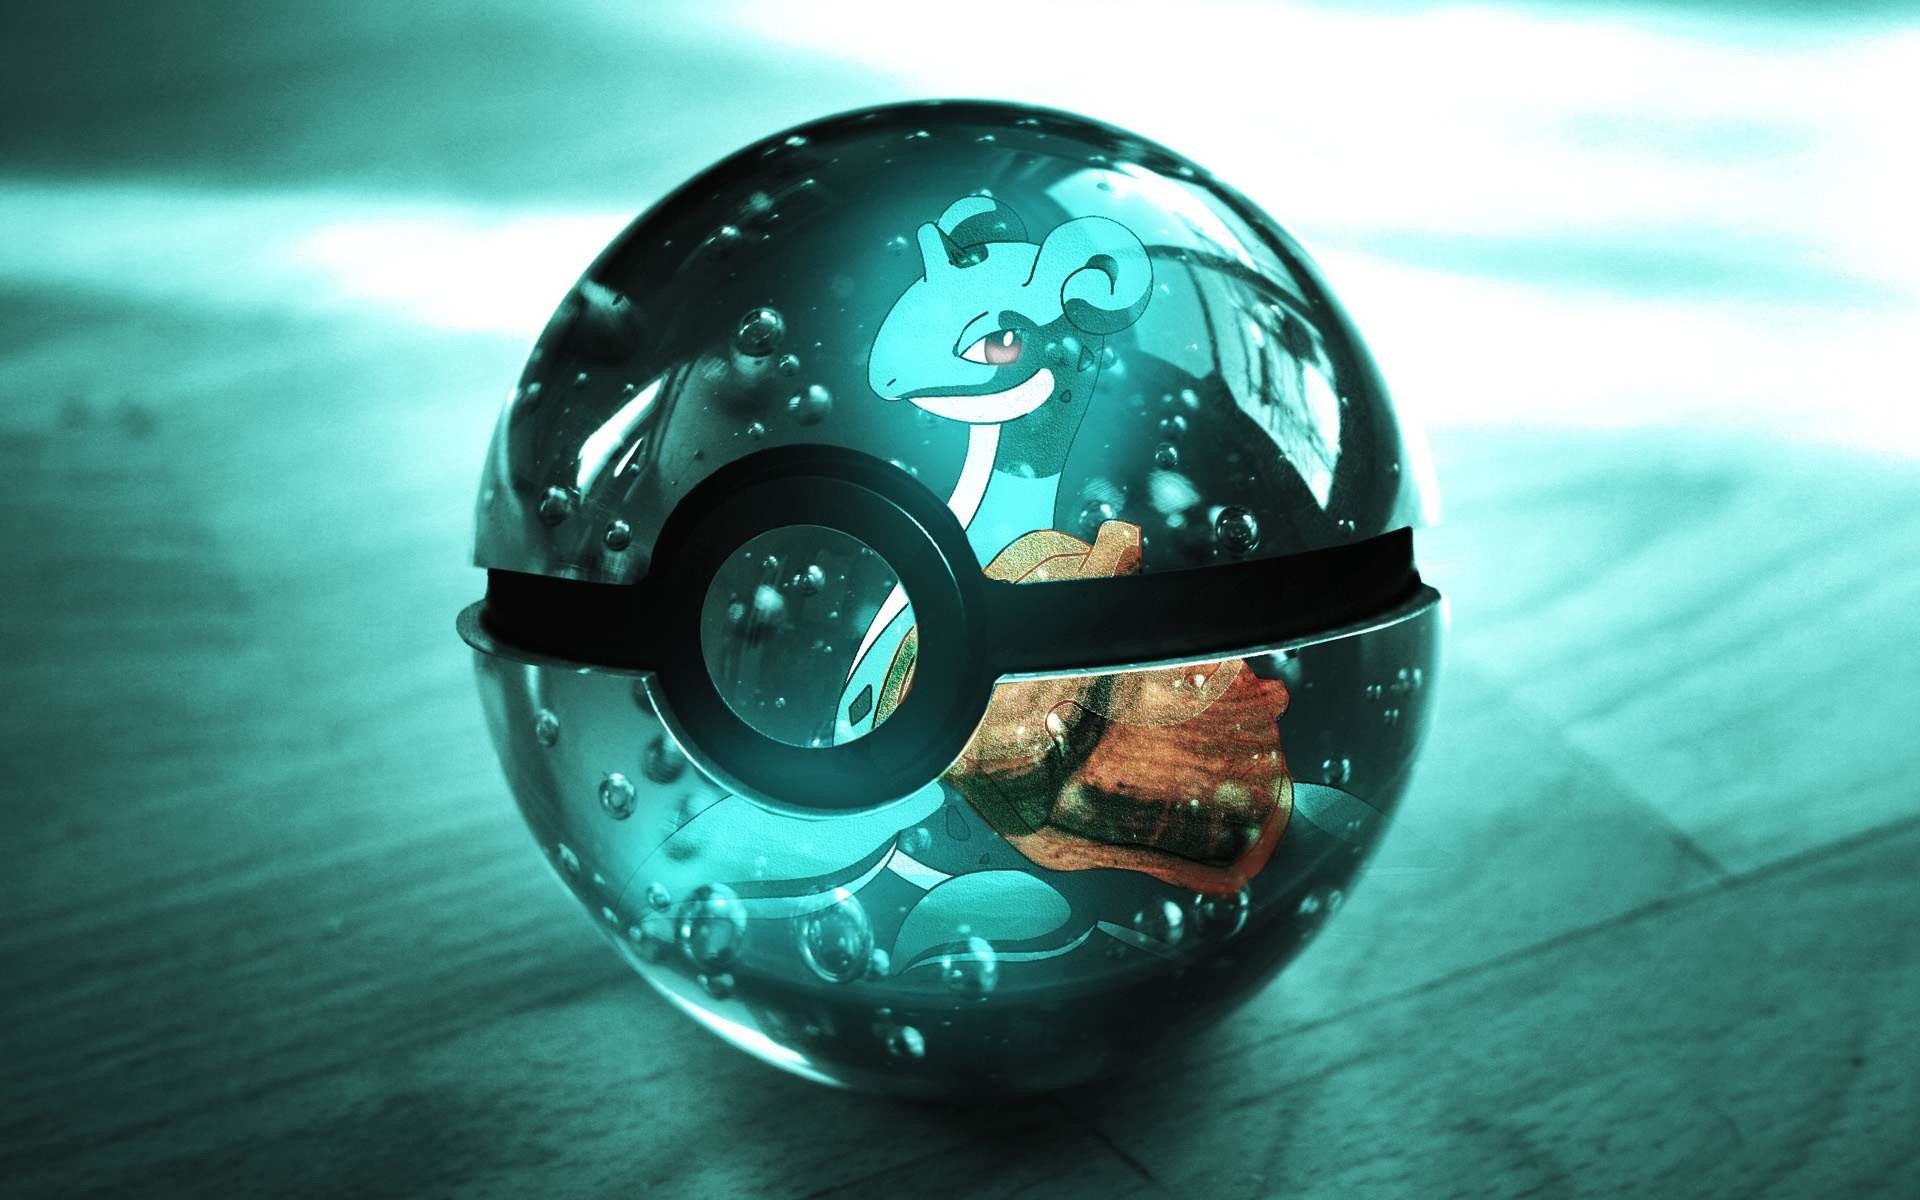 Shiny Pokeball Wallpaper from Pokemon. Shiny Pokeball with Lapras on it